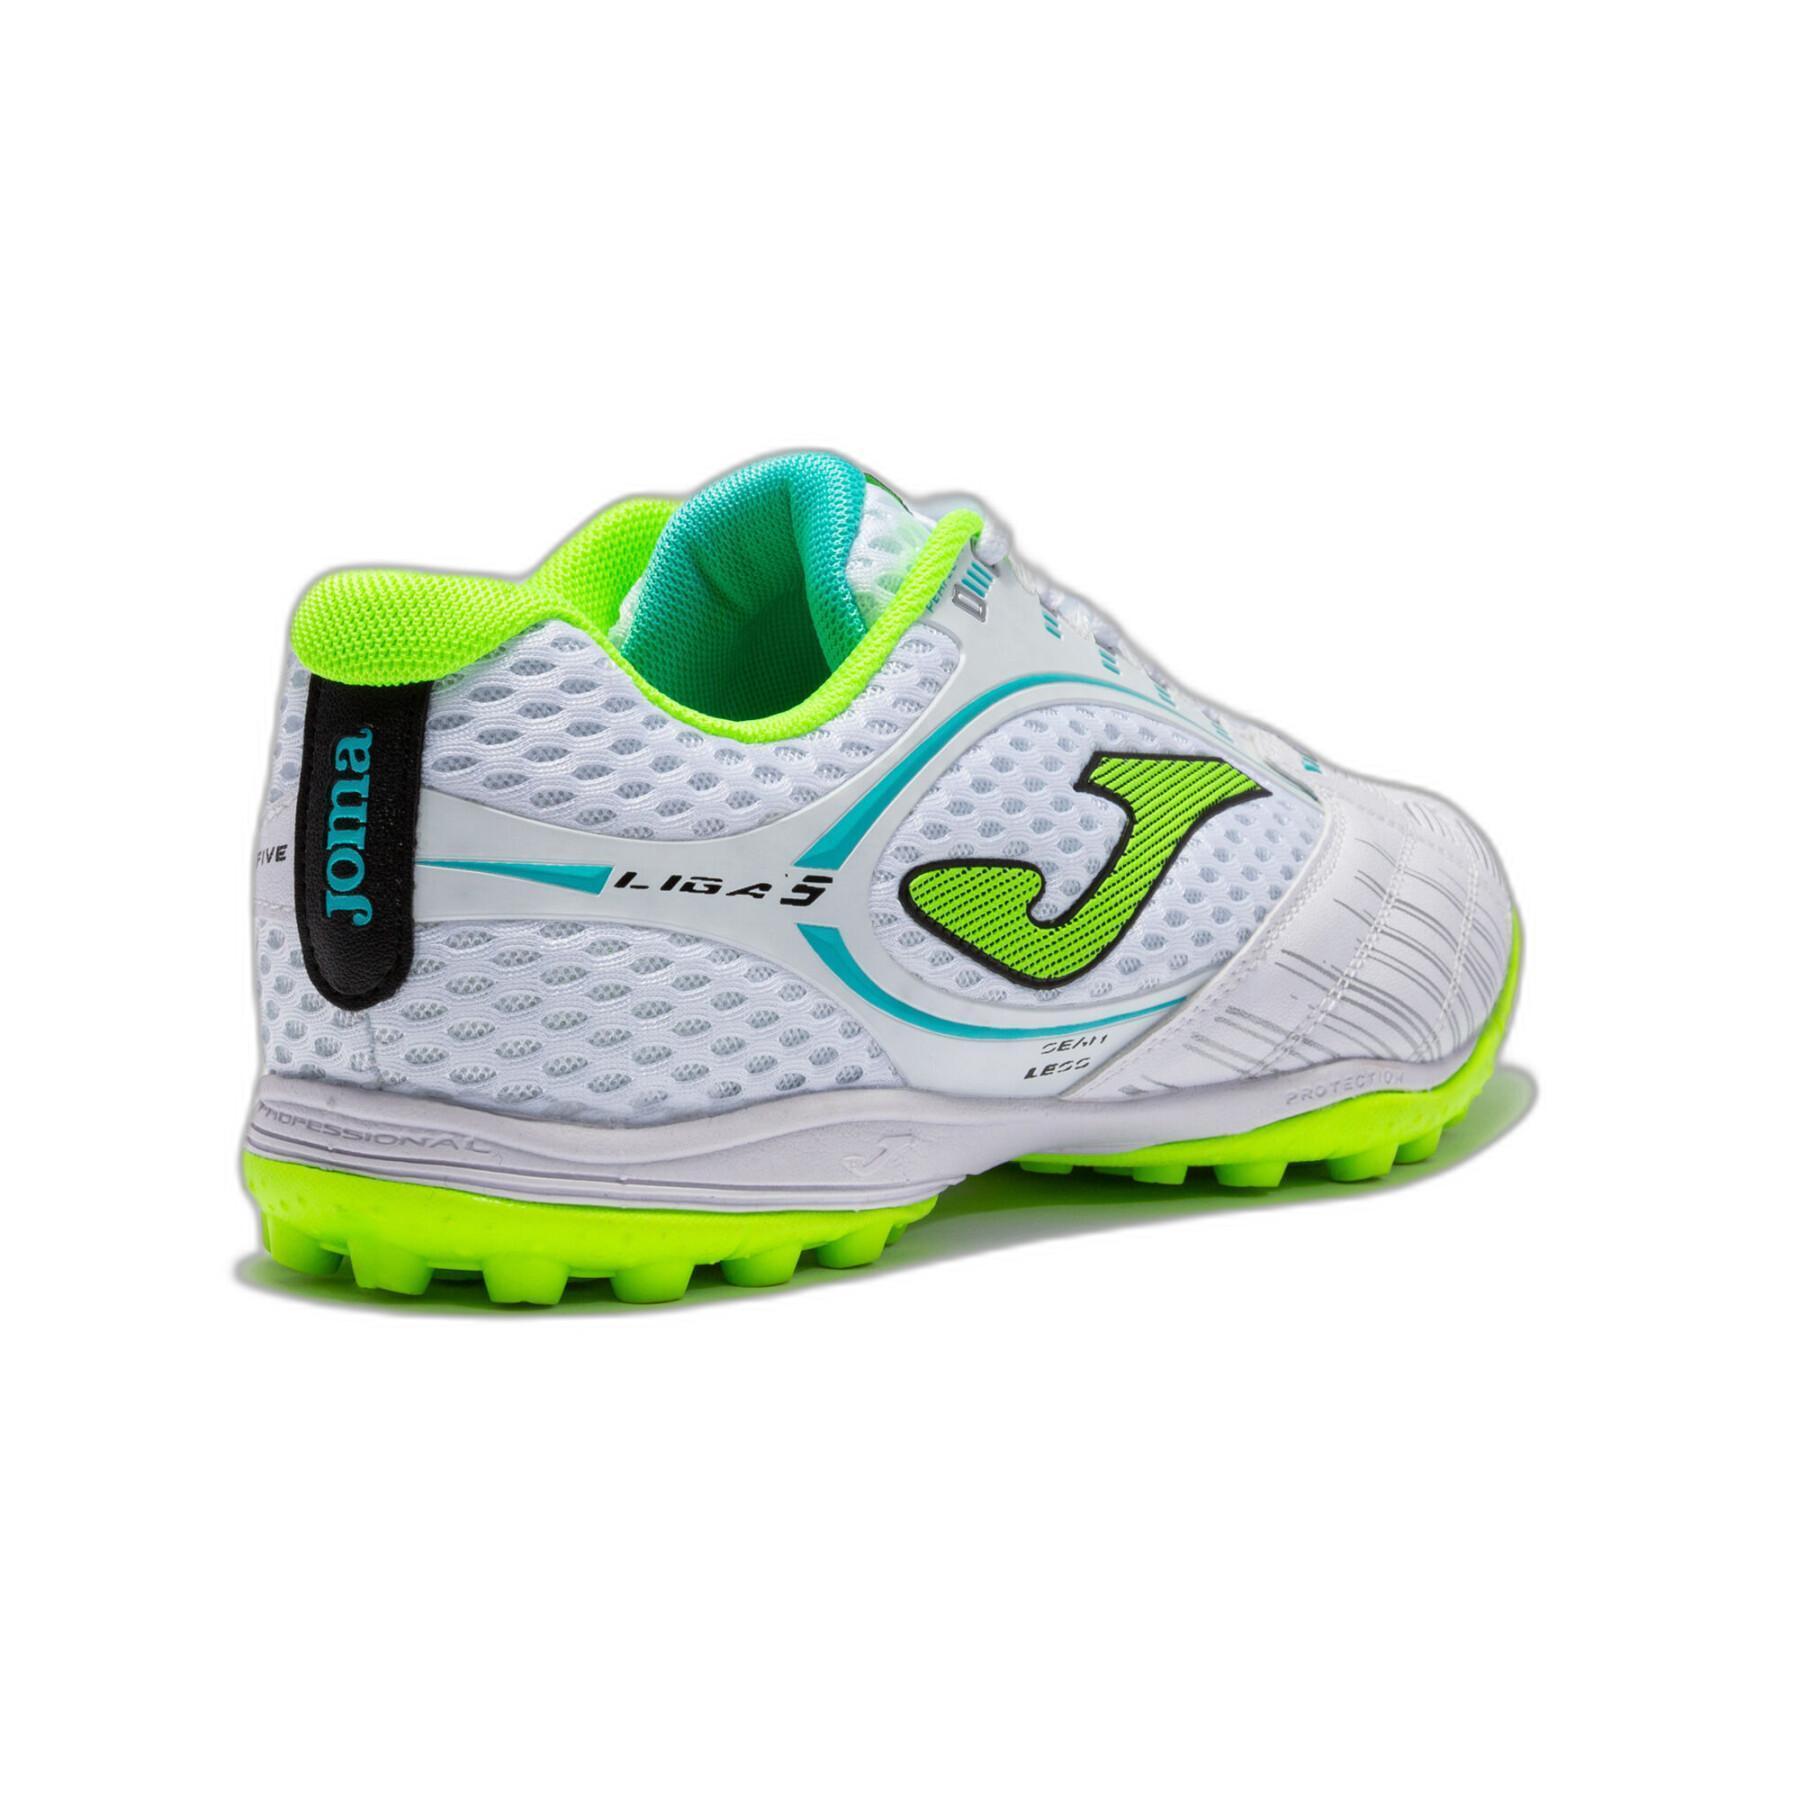 Soccer shoes Joma Liga-5